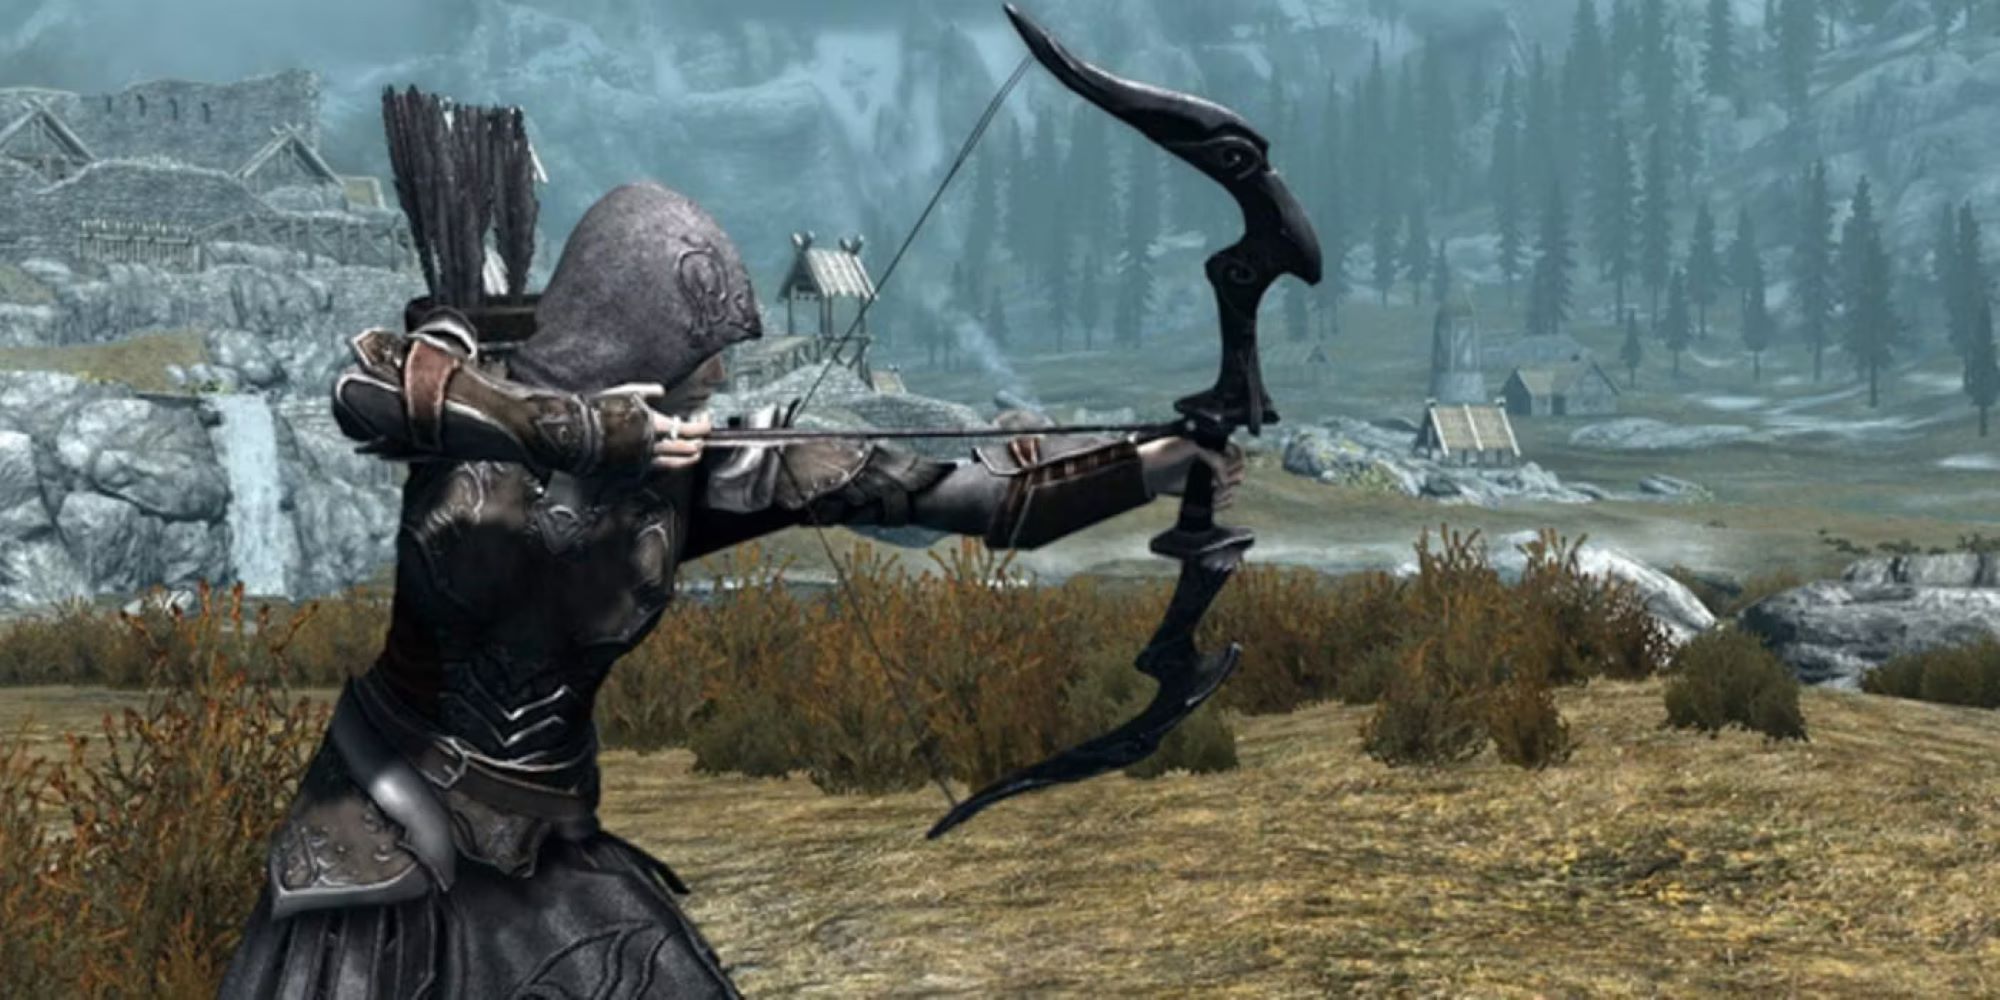 Skyrim:An archer in black draws her bow